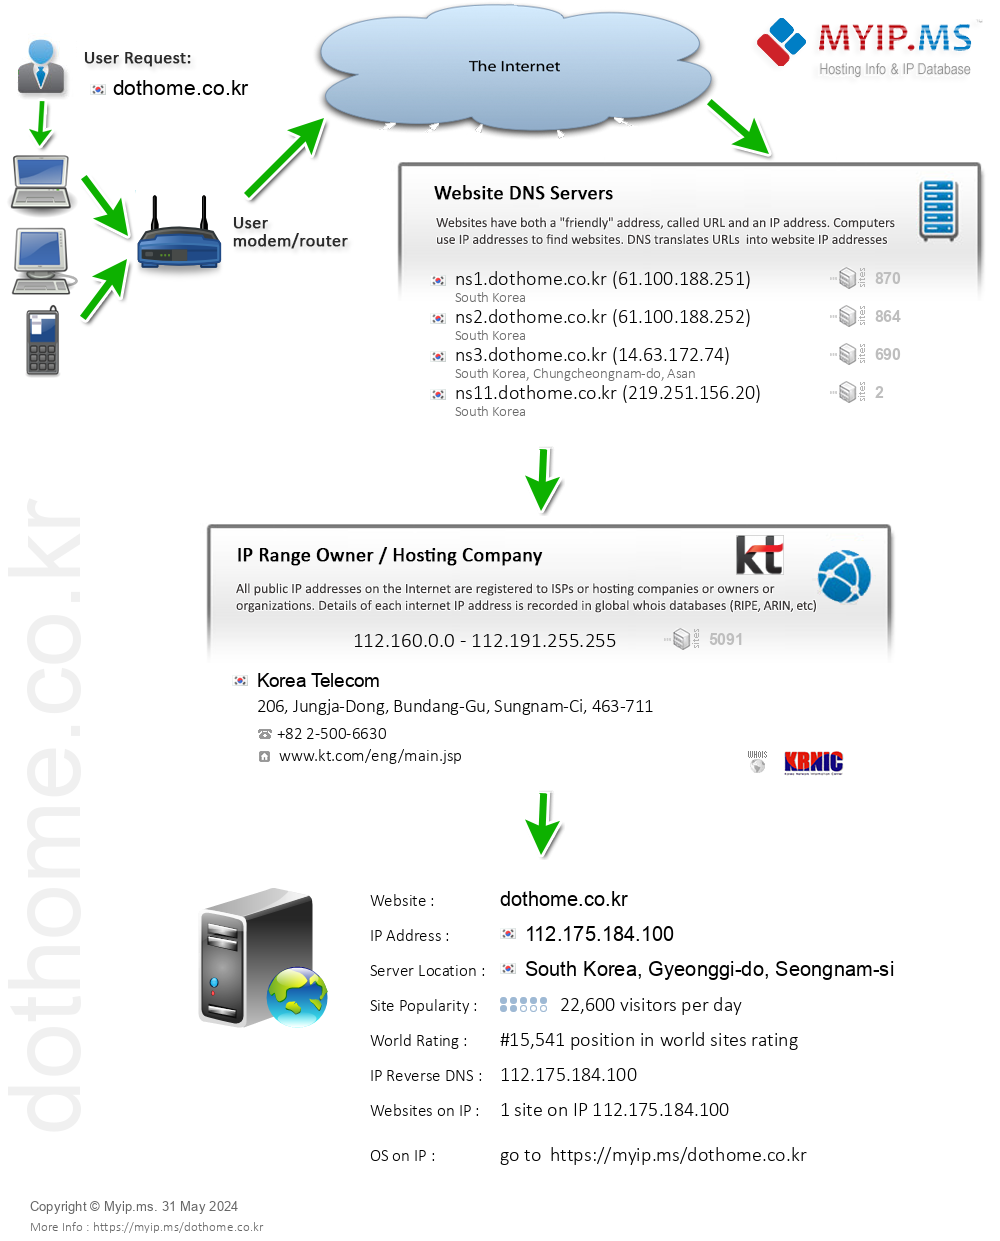 Dothome.co.kr - Website Hosting Visual IP Diagram